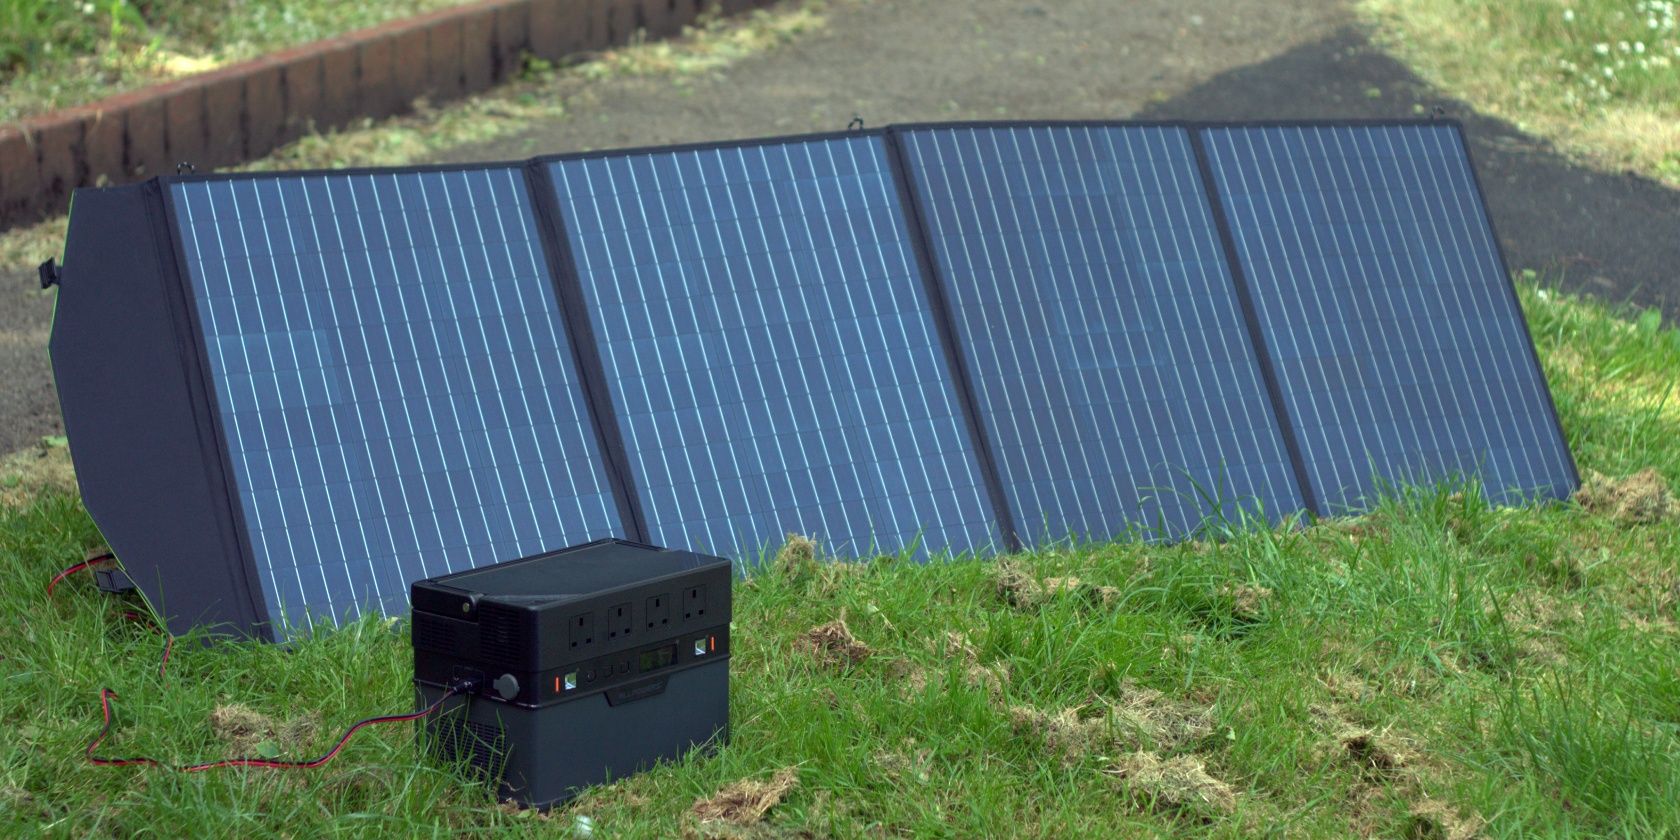 AllPowers-S1500-Solar-Generator-Sat-In-Grass